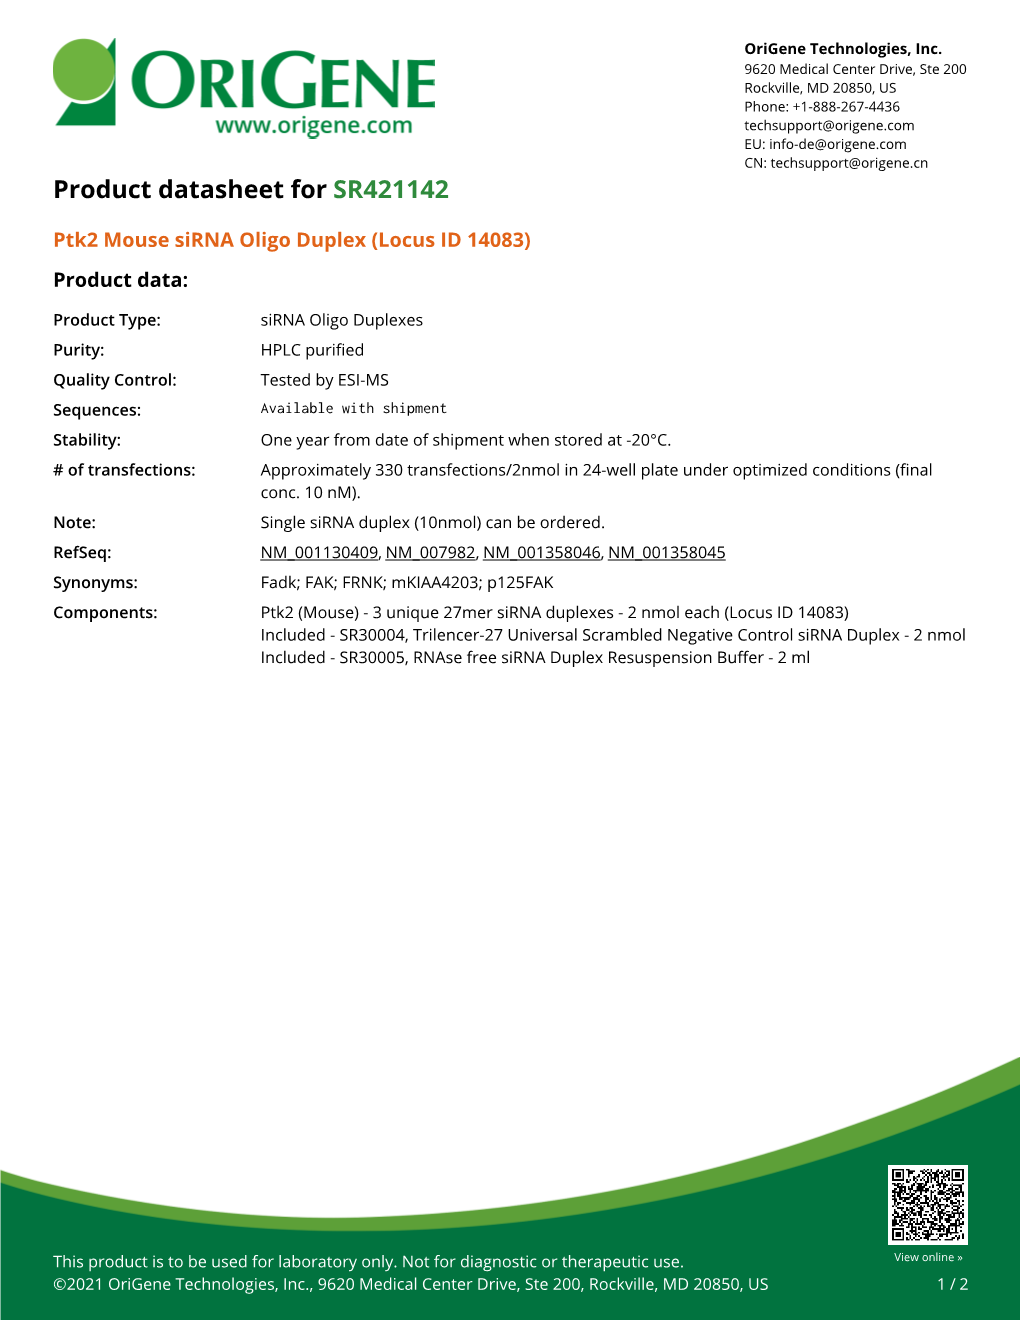 Ptk2 Mouse Sirna Oligo Duplex (Locus ID 14083) Product Data